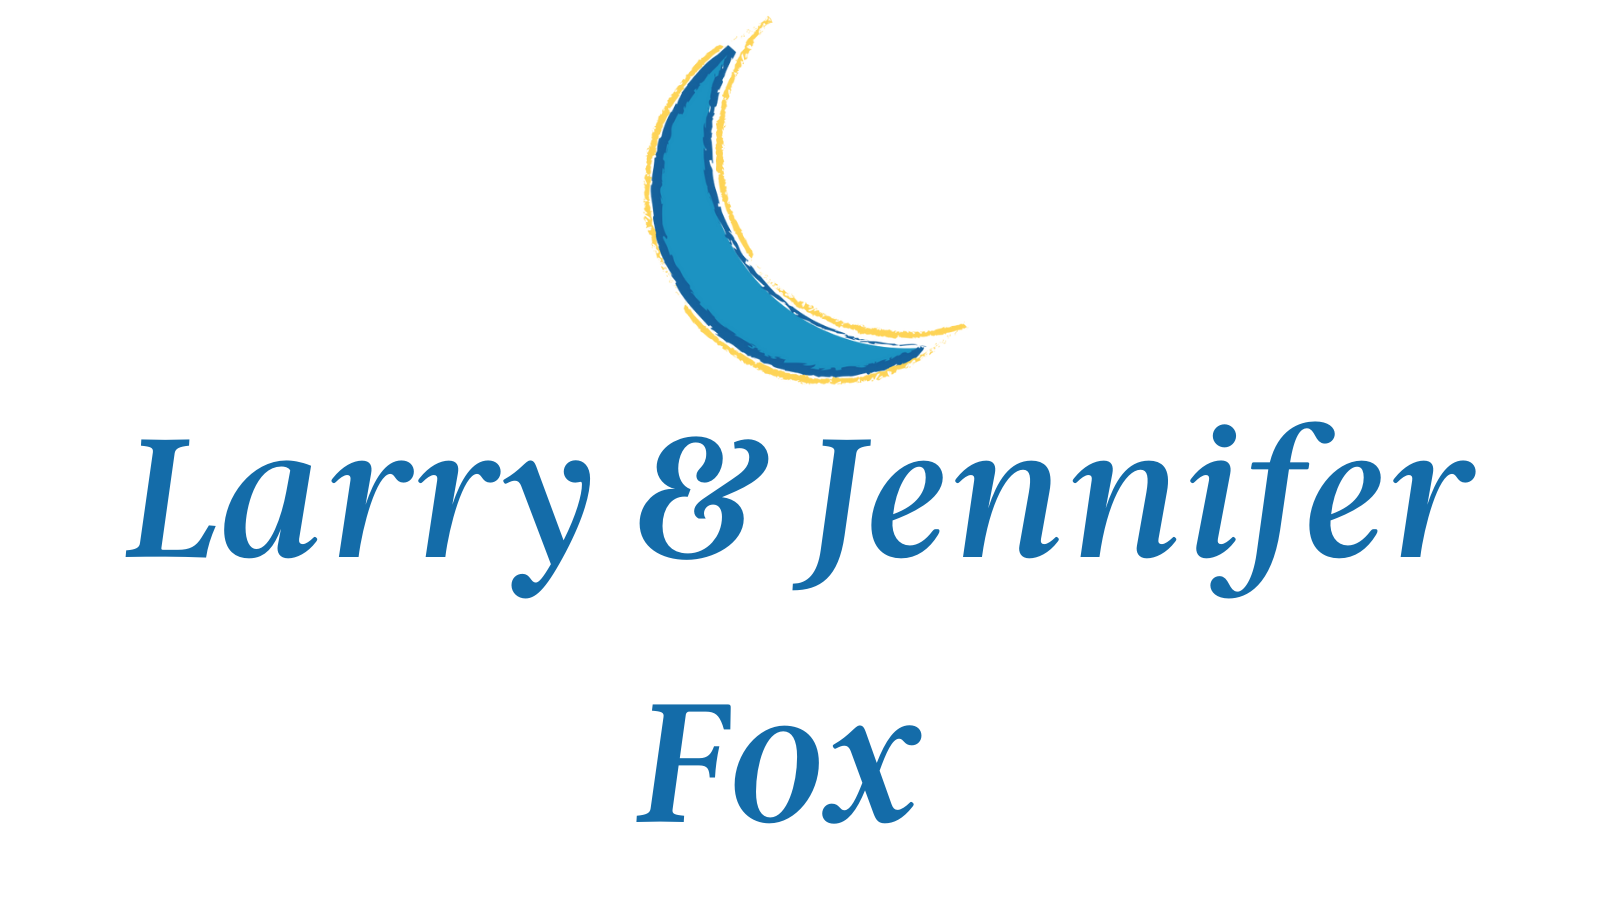 Larry & Jennifer Fox